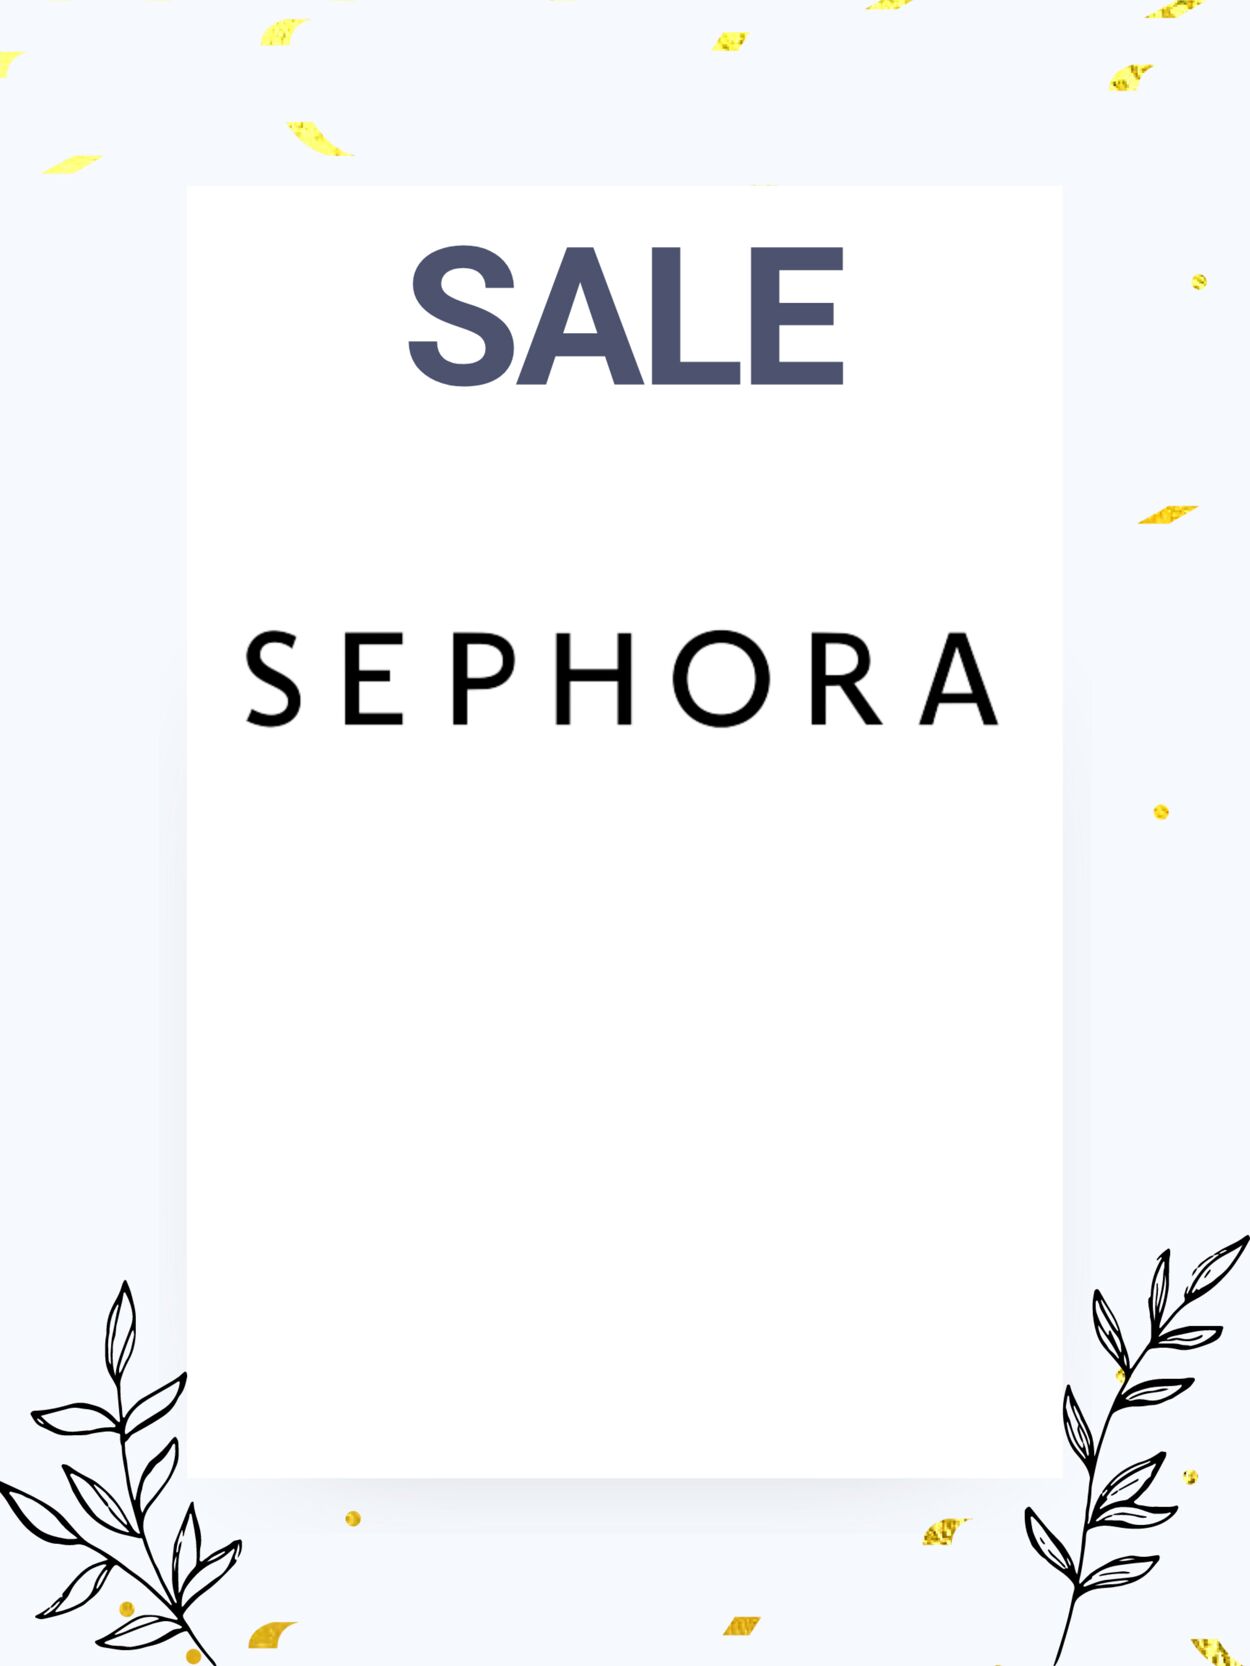 Sephora Promotional flyers